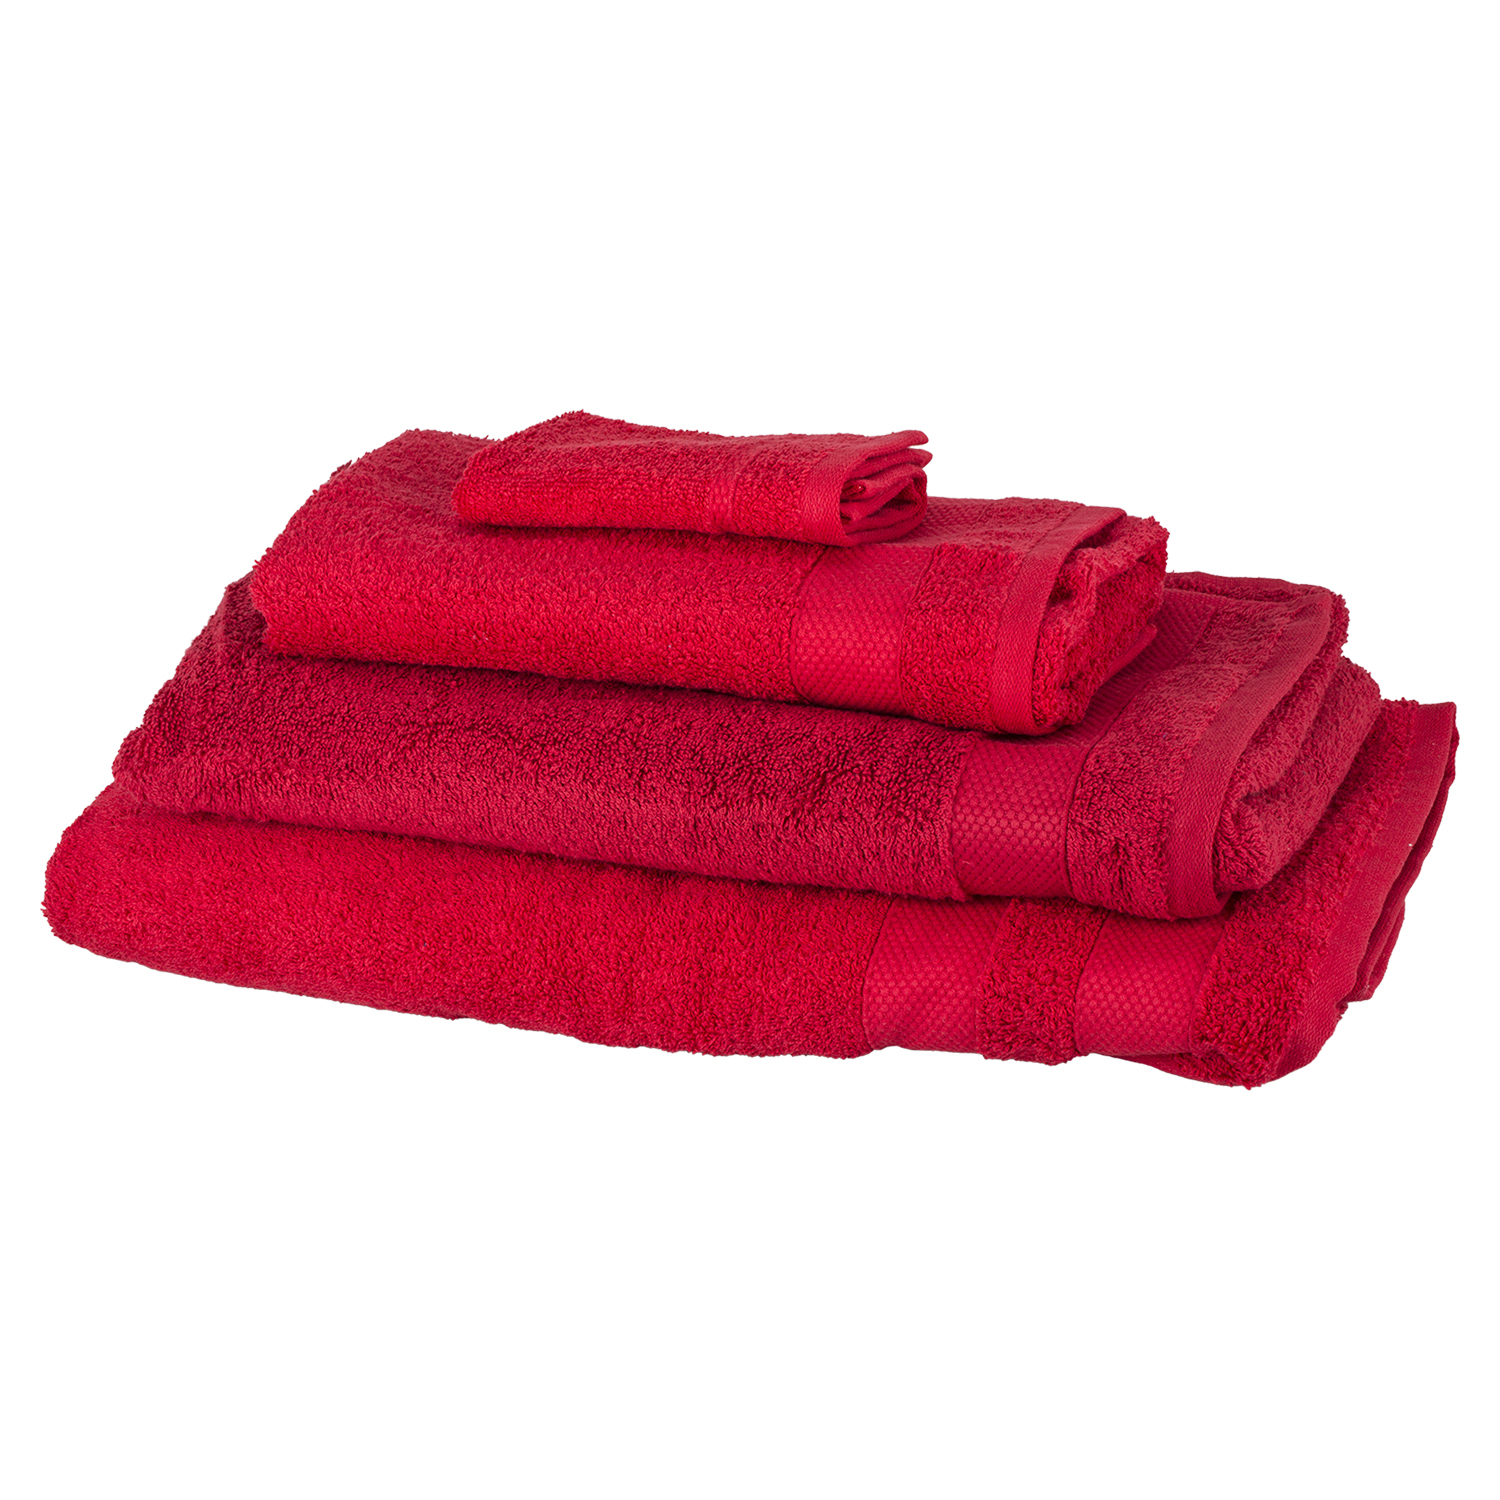 Egyptian Cotton Bath Sheet - Red Image